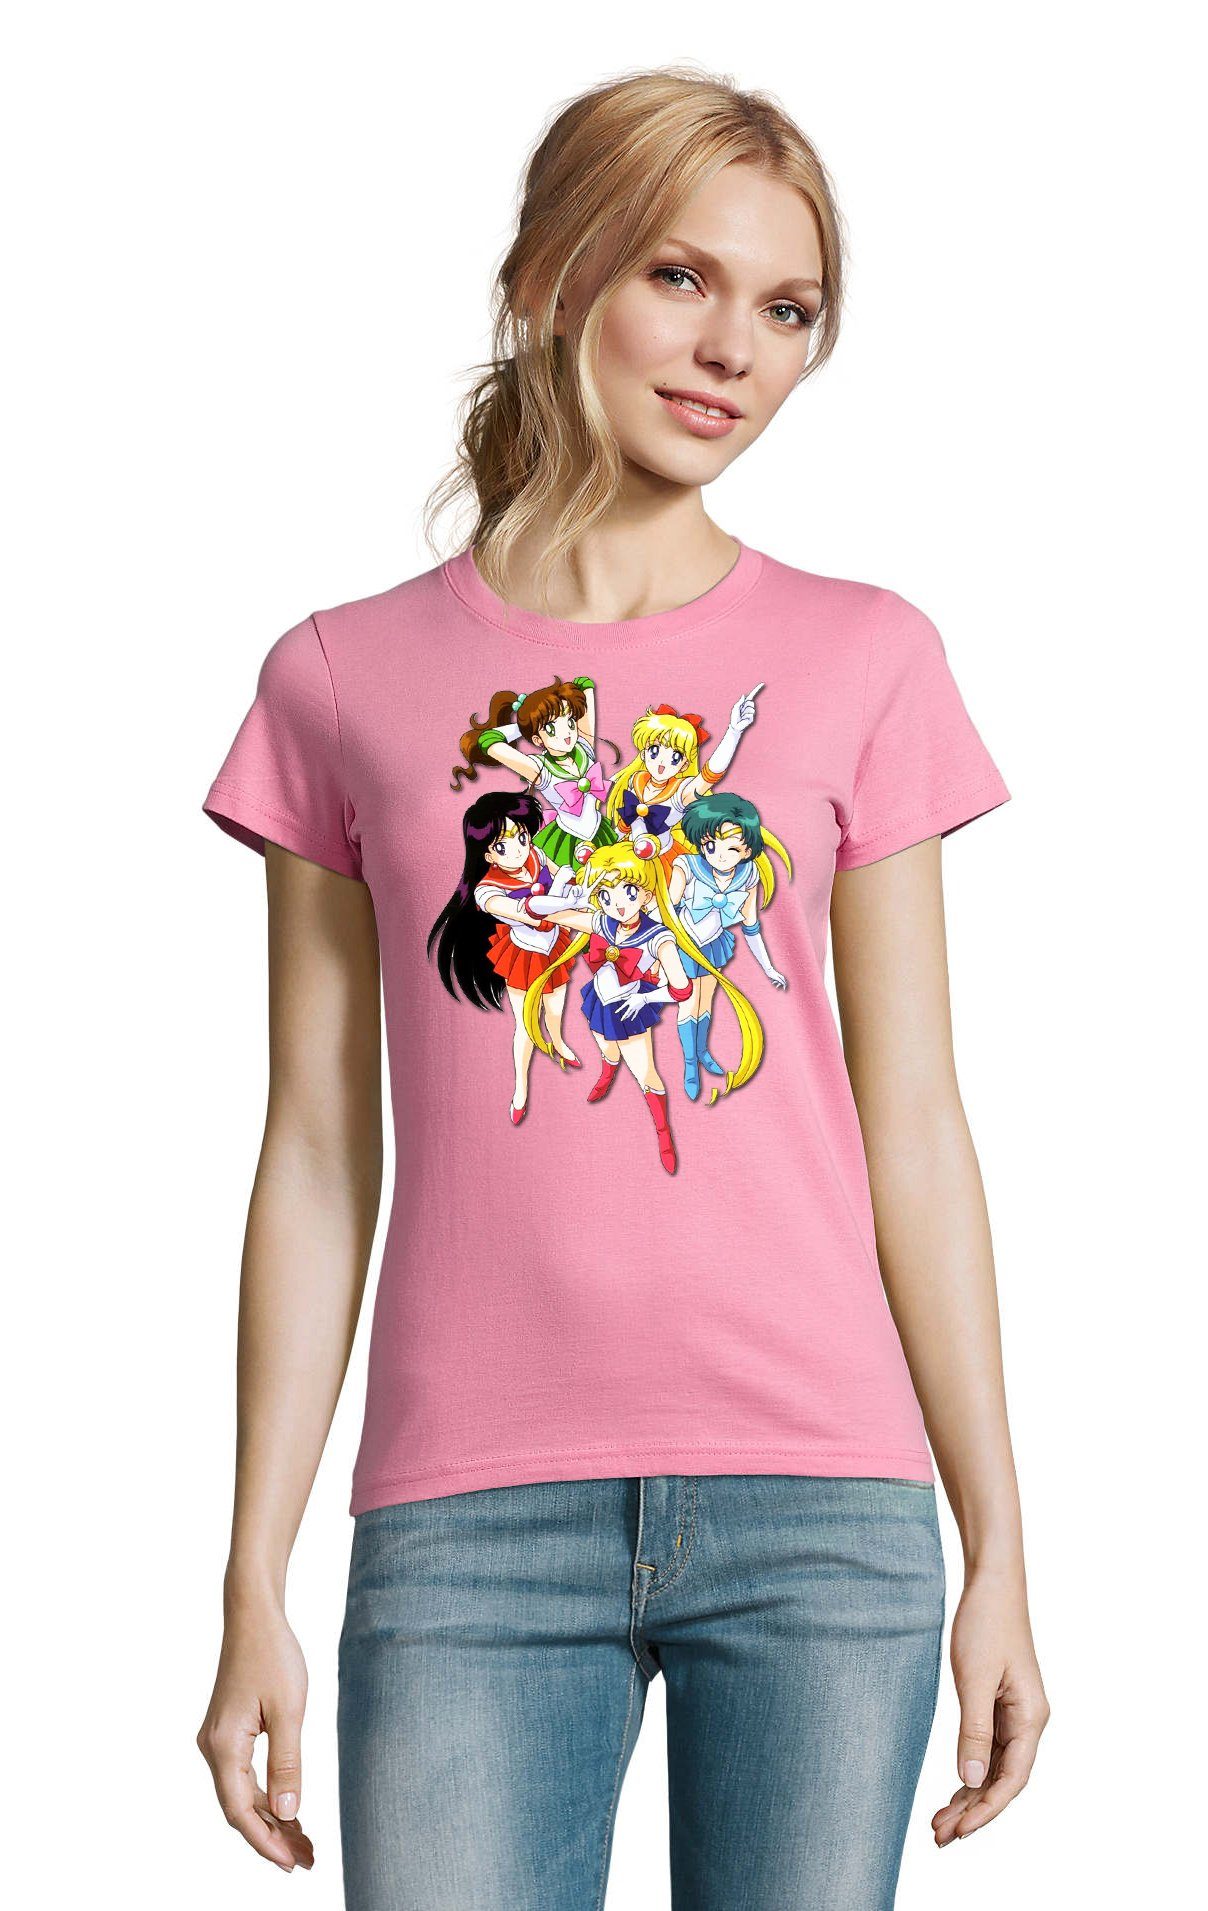 Blondie & Brownie T-Shirt Damen Fun Comic Sailor Moon and Friends Anime Manga Rosa